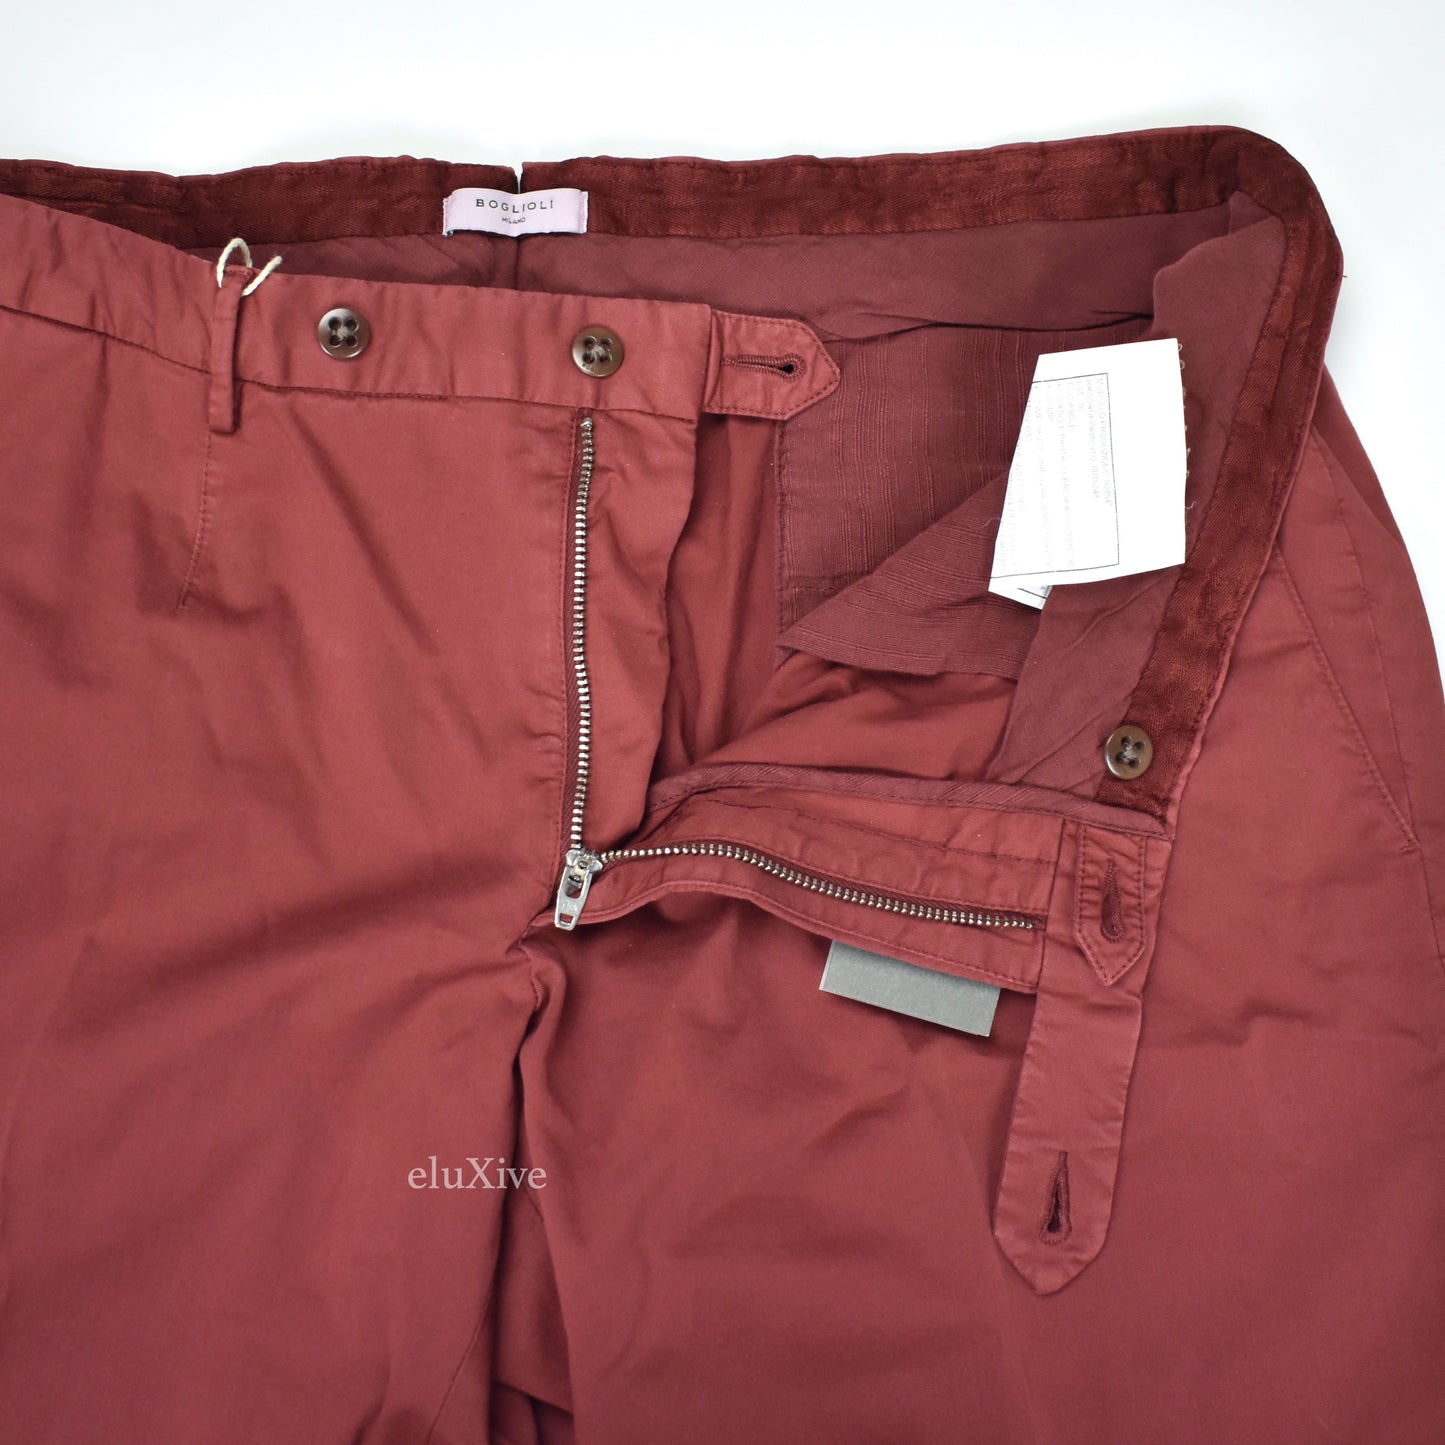 Boglioli - Brick Red Cotton Twill Pants